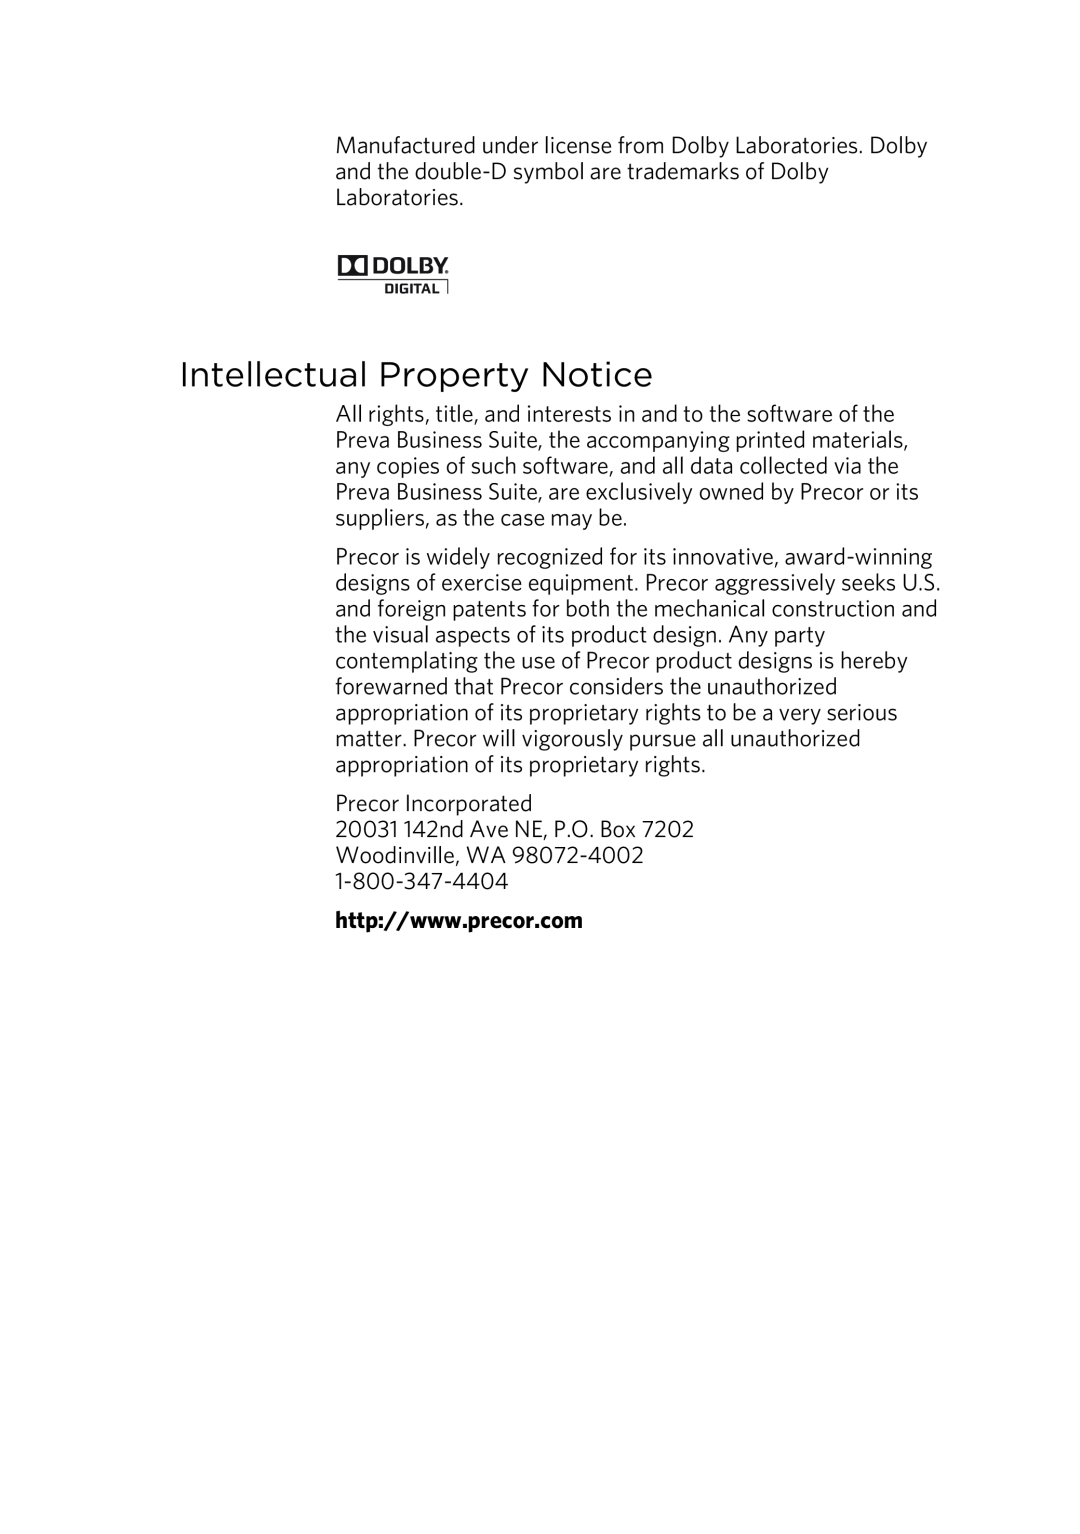 Precor P80 manual Intellectual Property Notice 